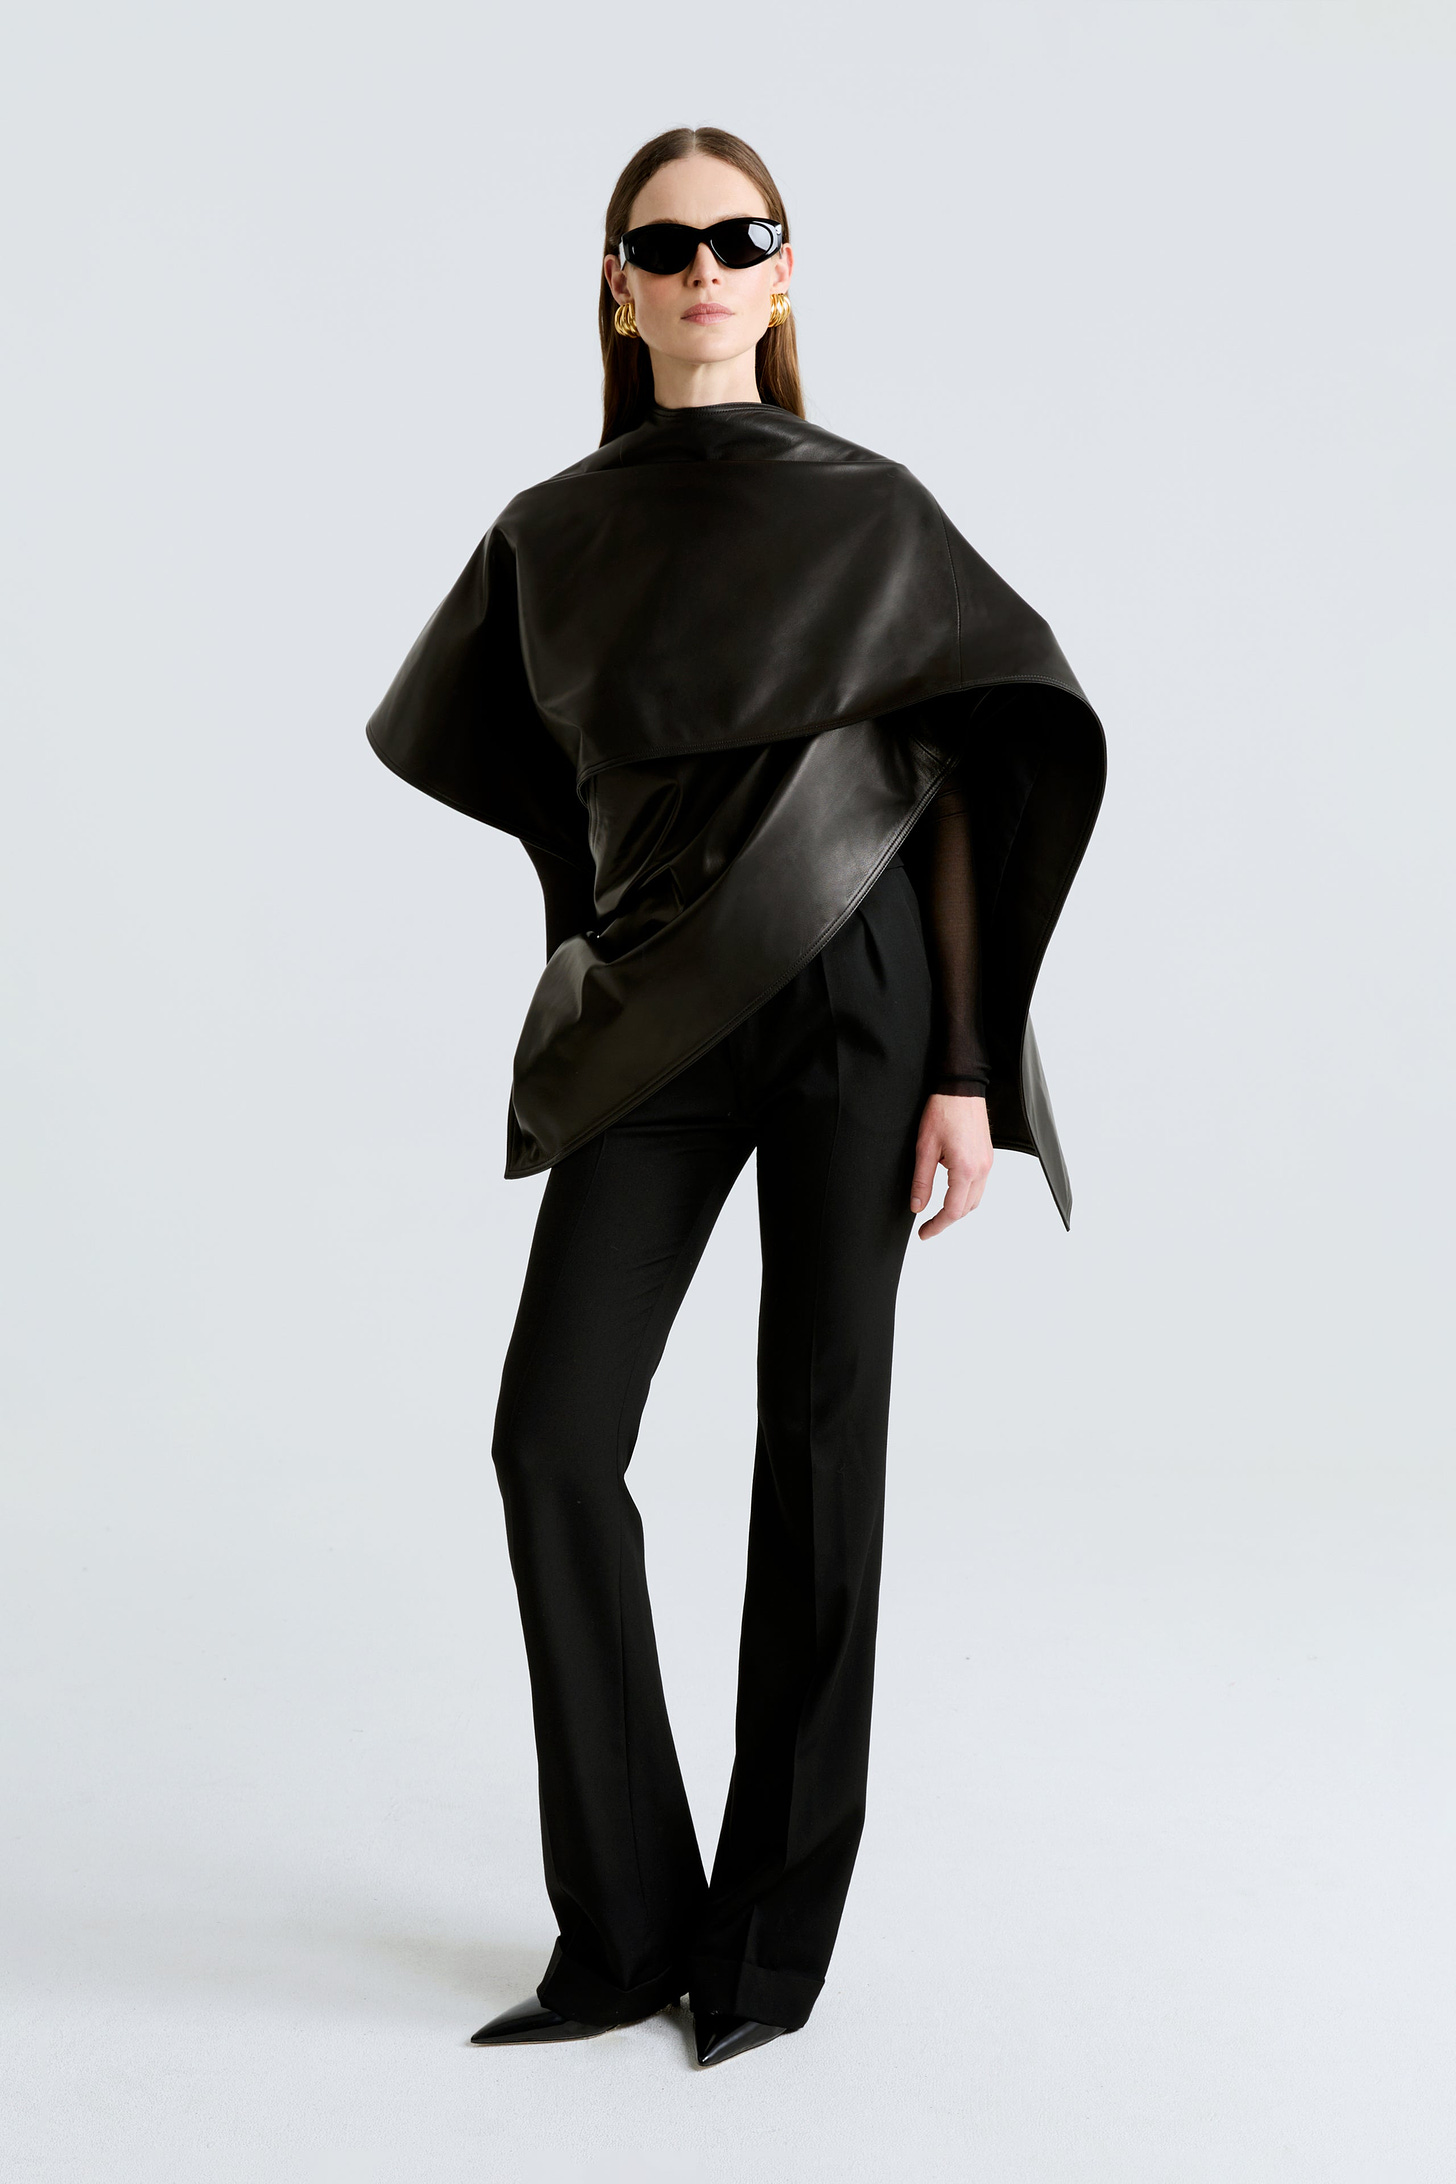 Model is wearing the Edra Black Sleek Leather Cape Front